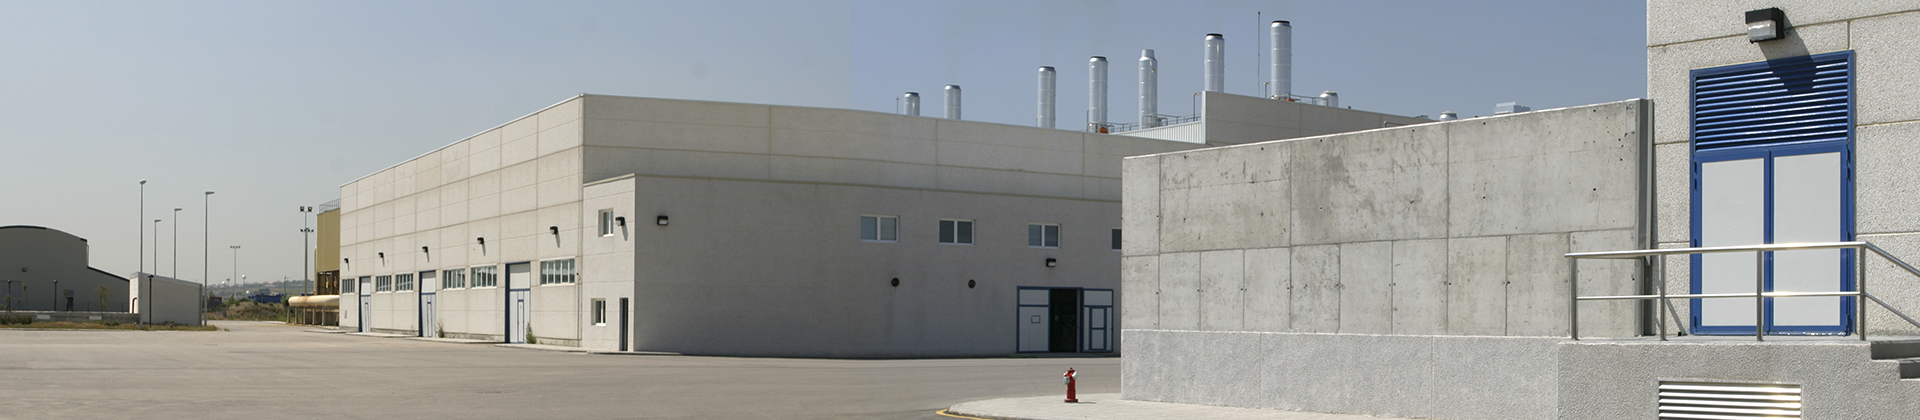 Madrid Barajas Airport - CHP Power Plant